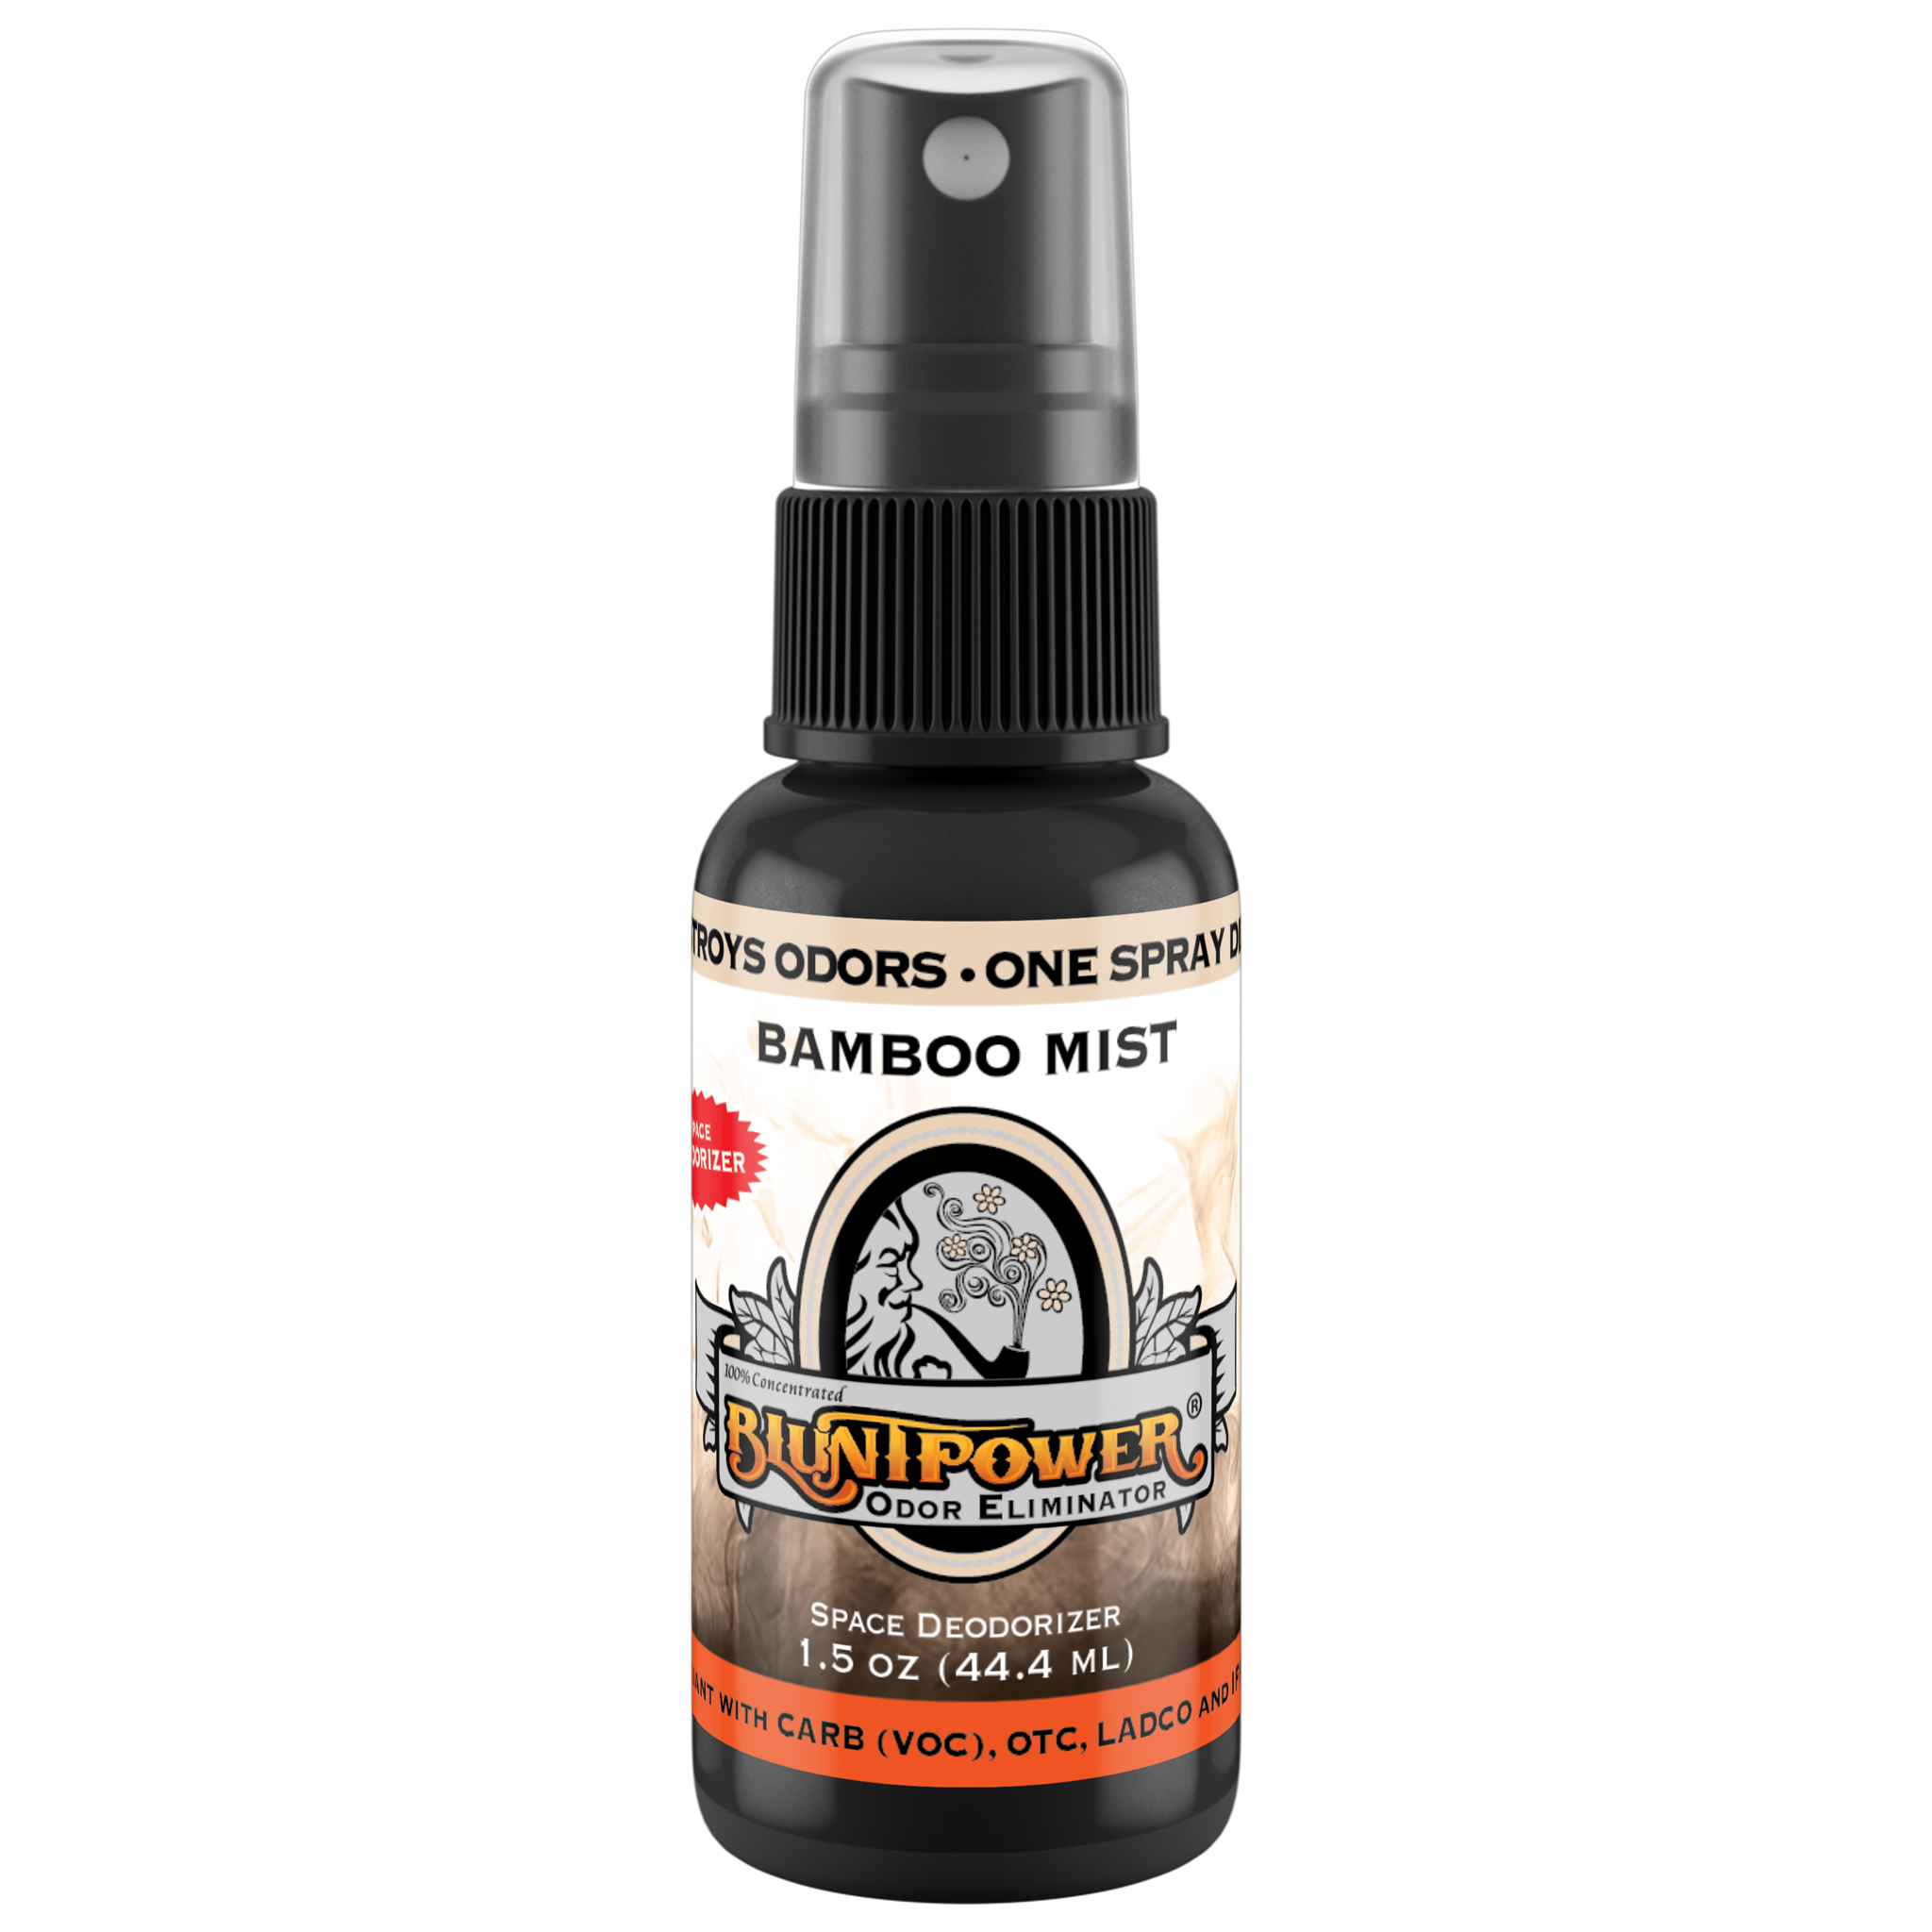 BluntPower Odor Eliminator - Bamboo Mist Scent